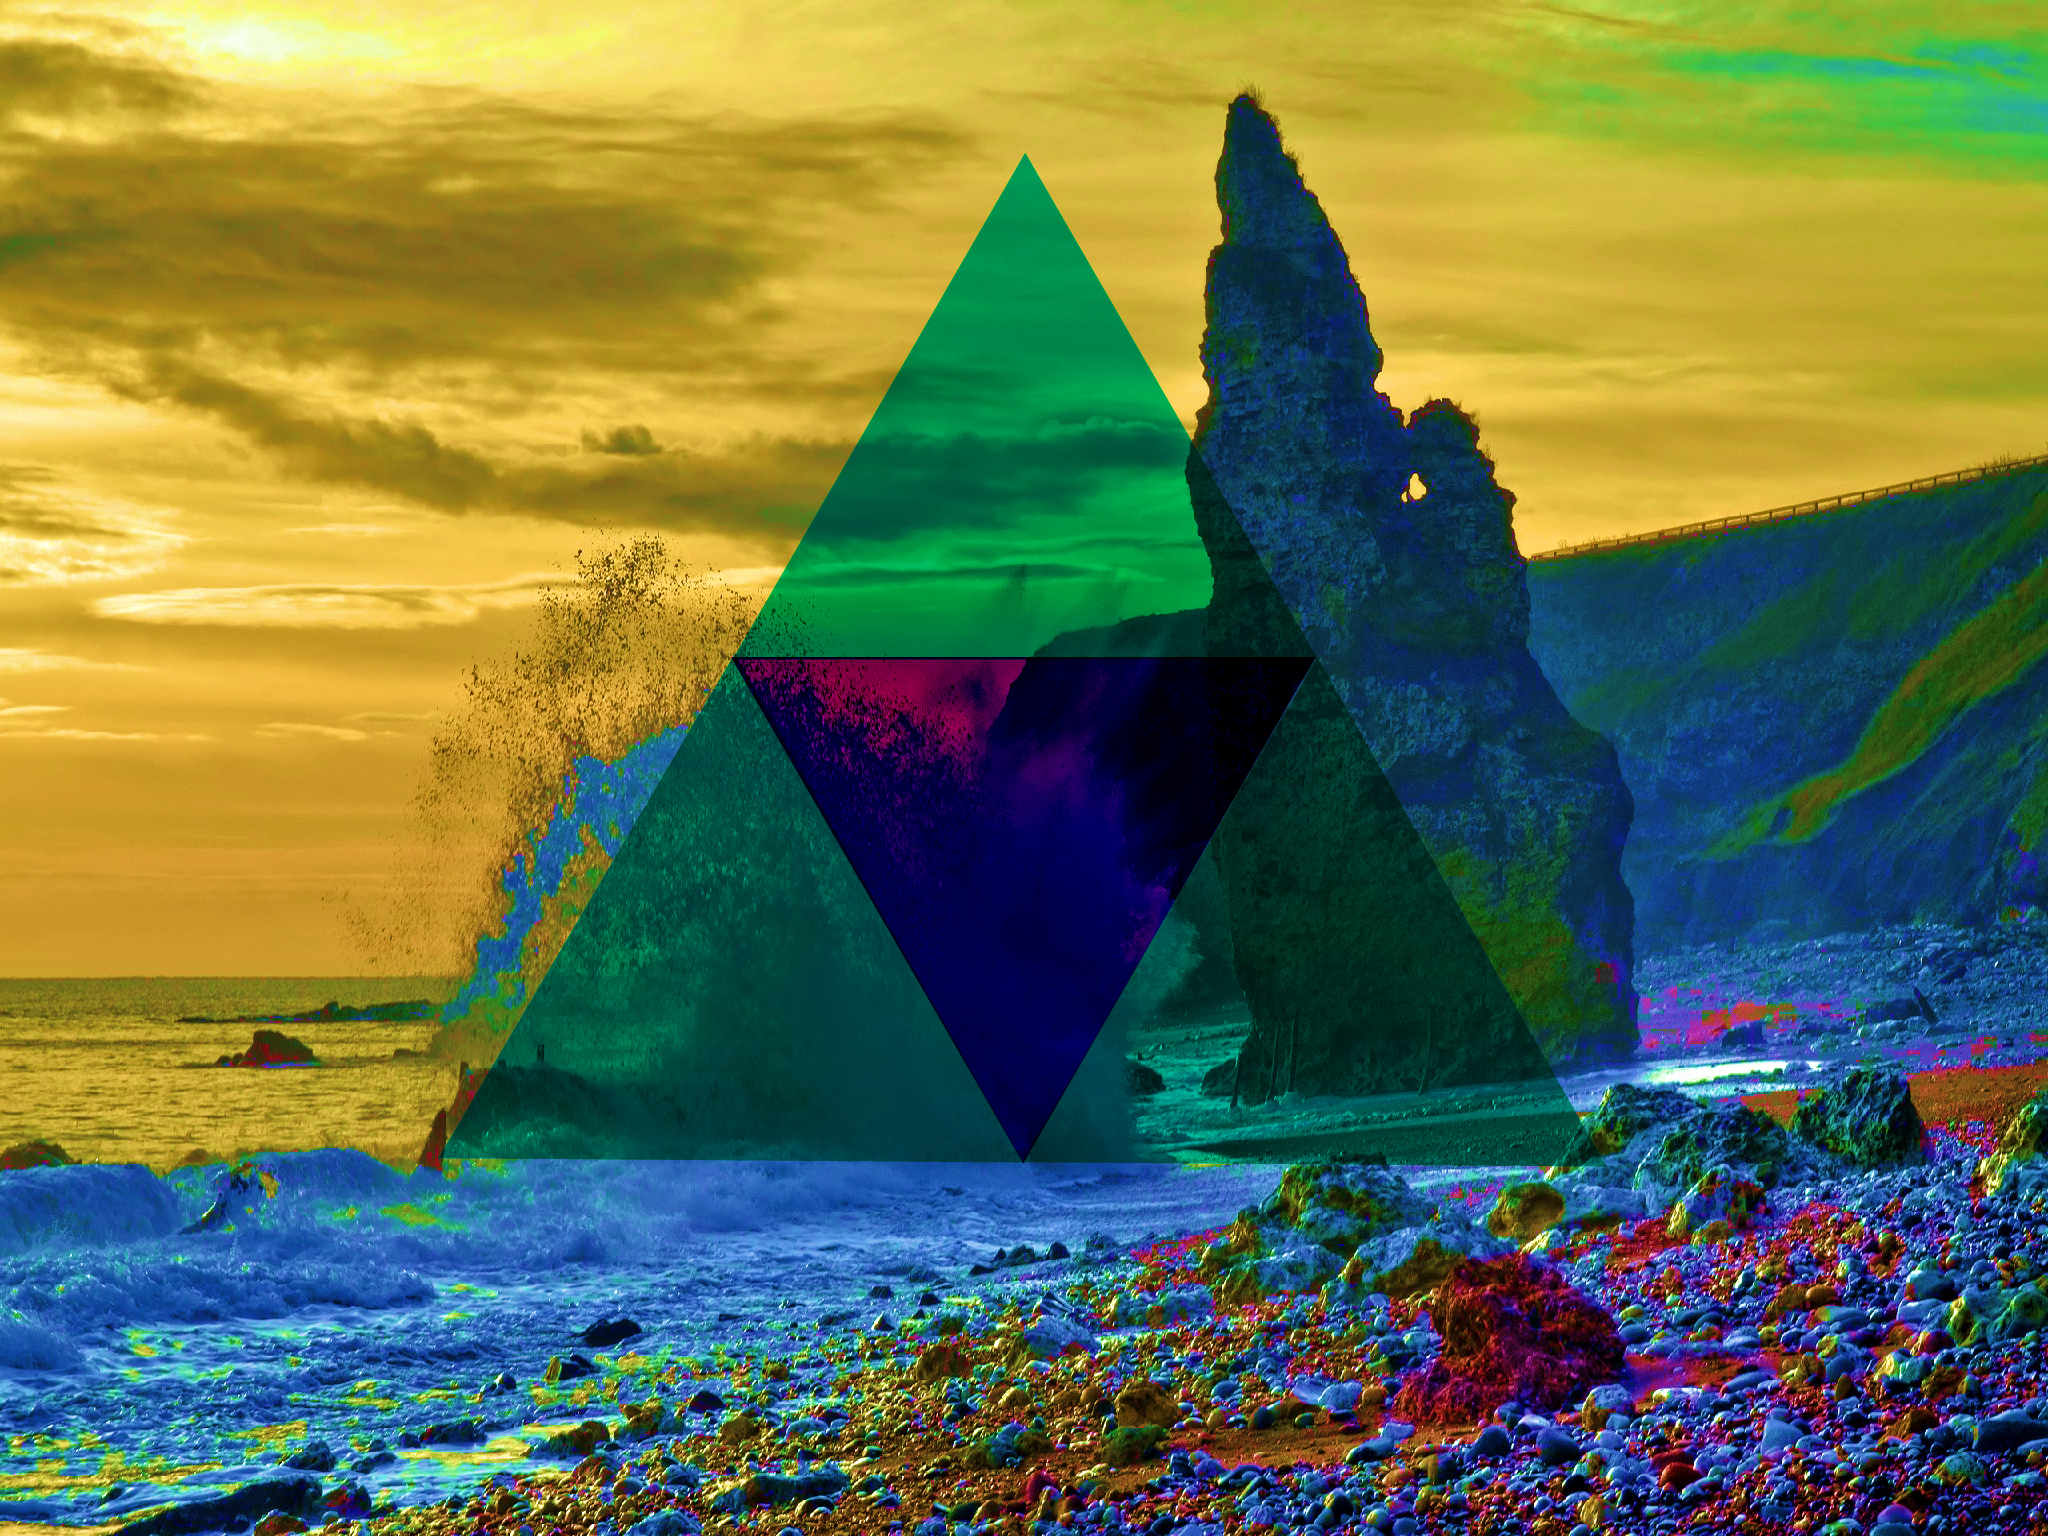 General 2048x1536 triangle minimalism beach rocks landscape sea bay saturation digital art photo manipulation